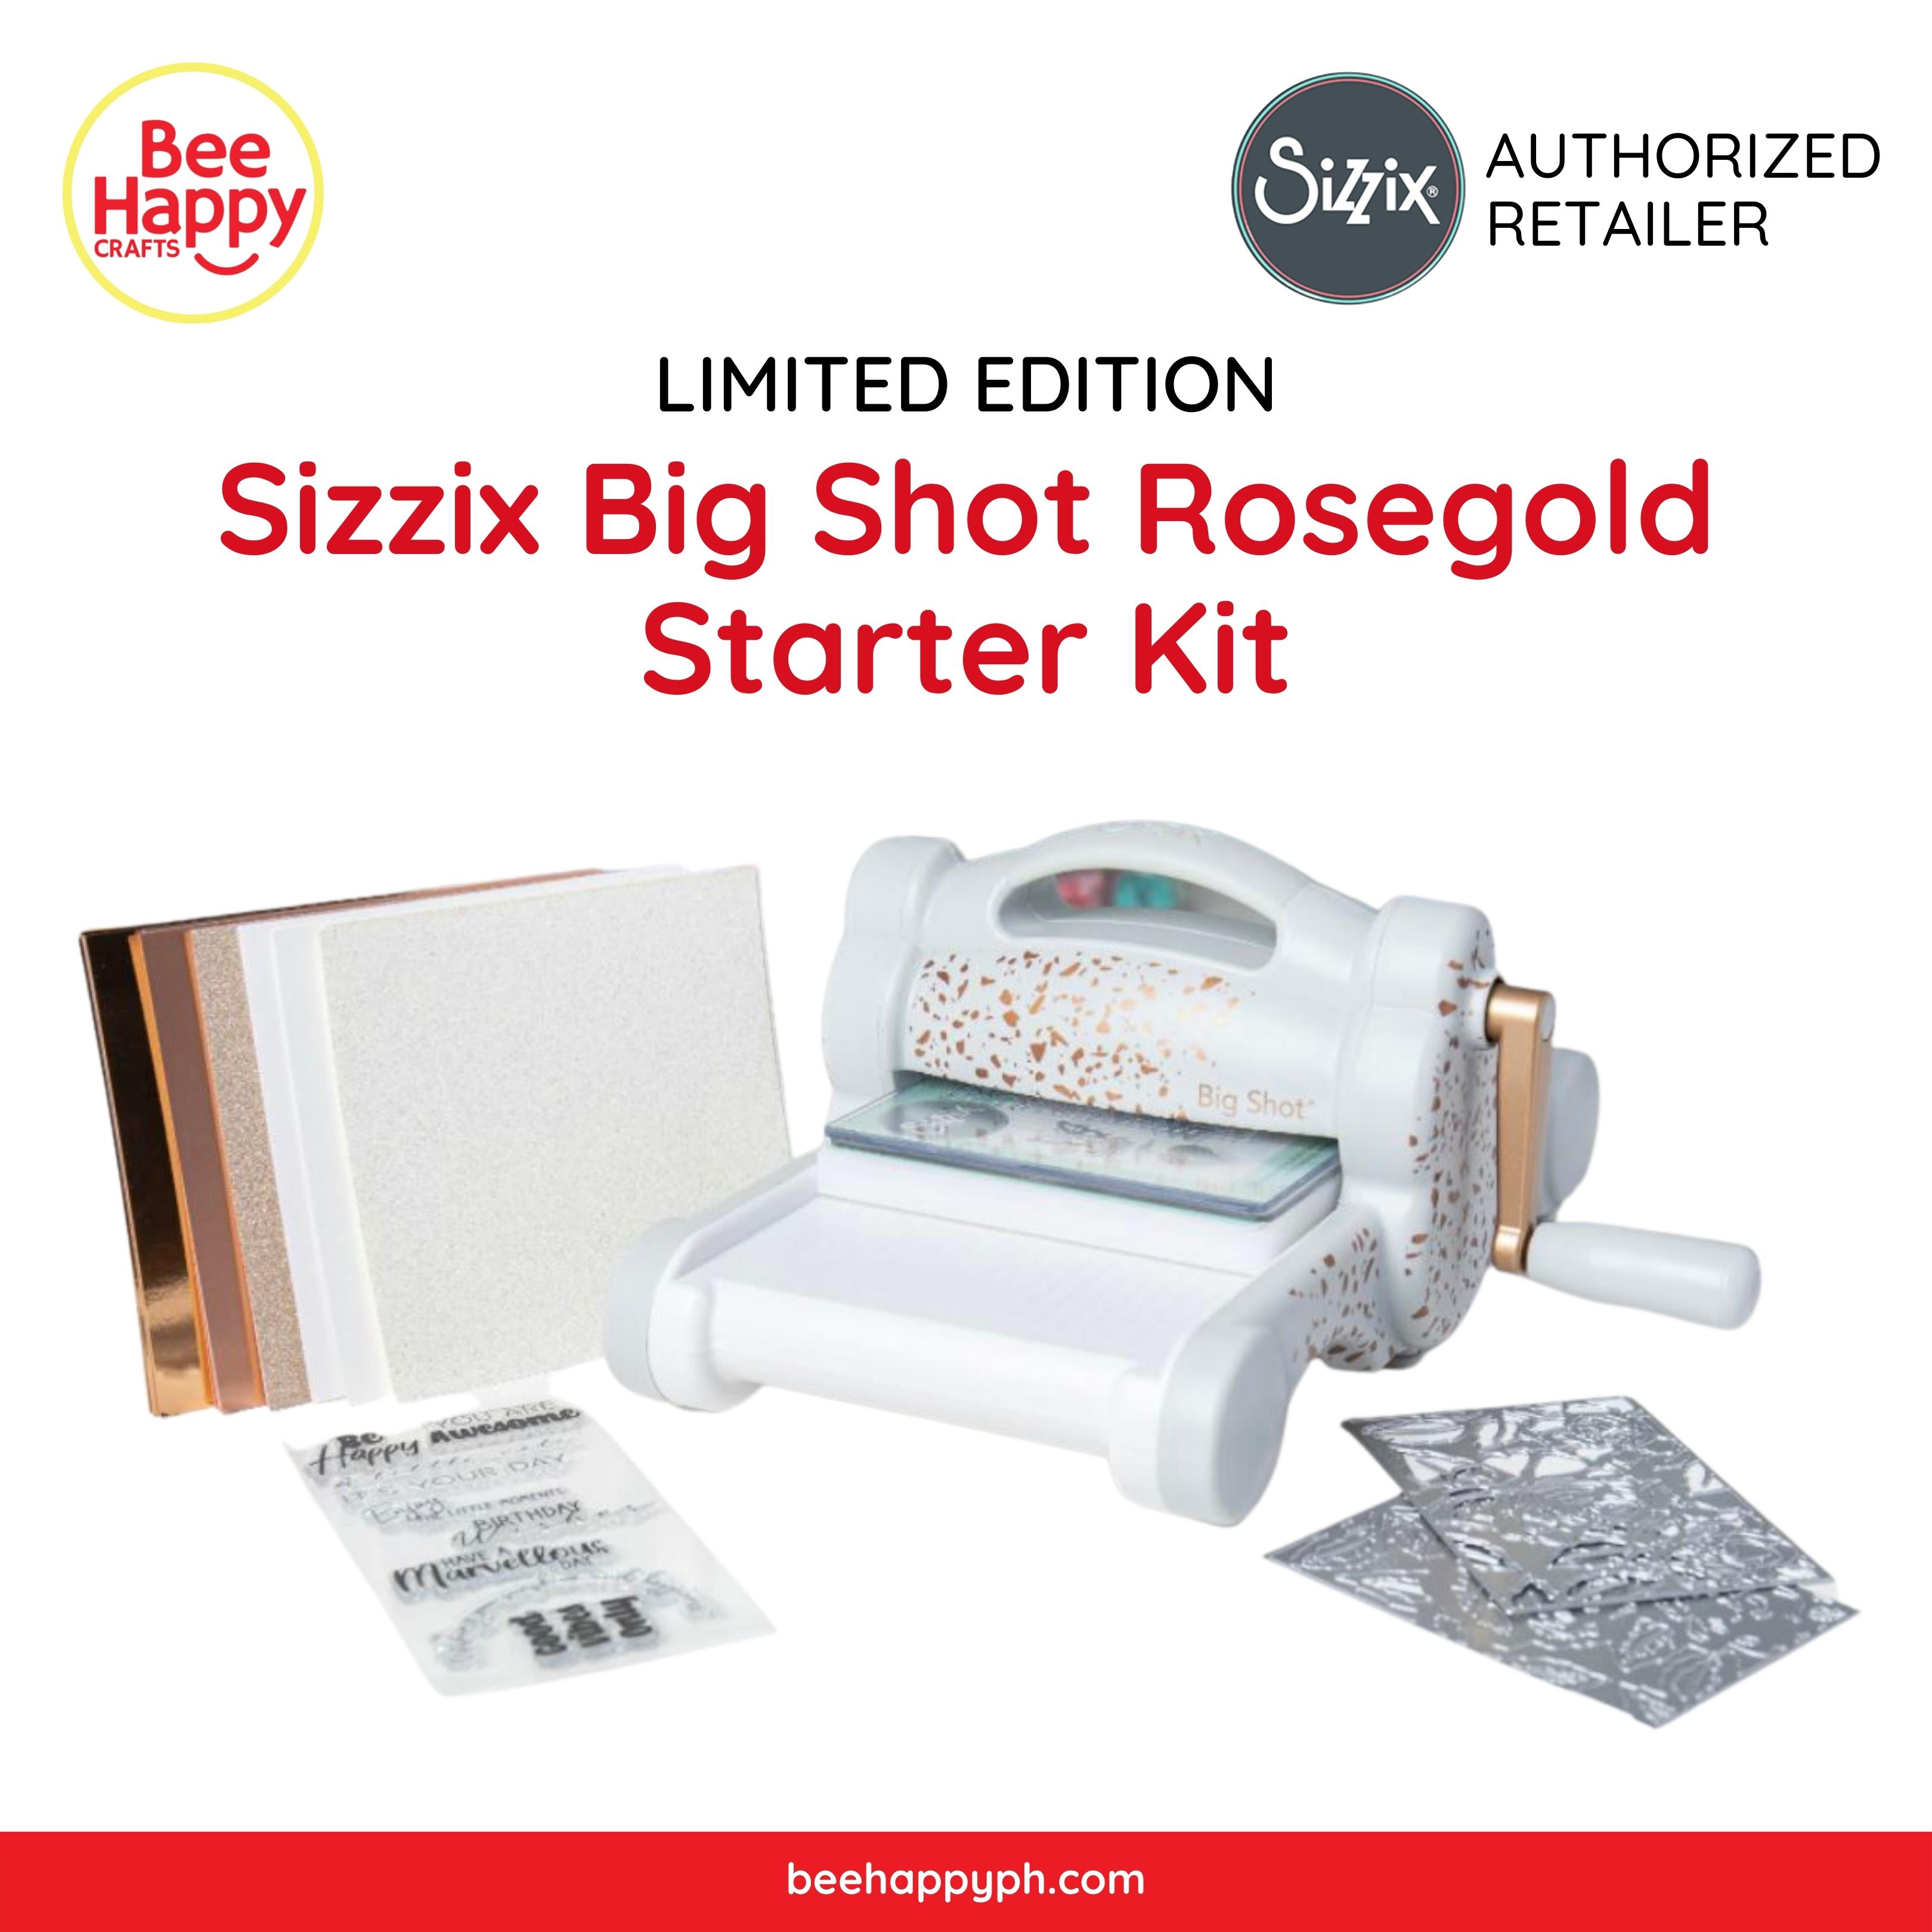 Limited Edition Sizzix Big Shot Rose Gold Starter Kit